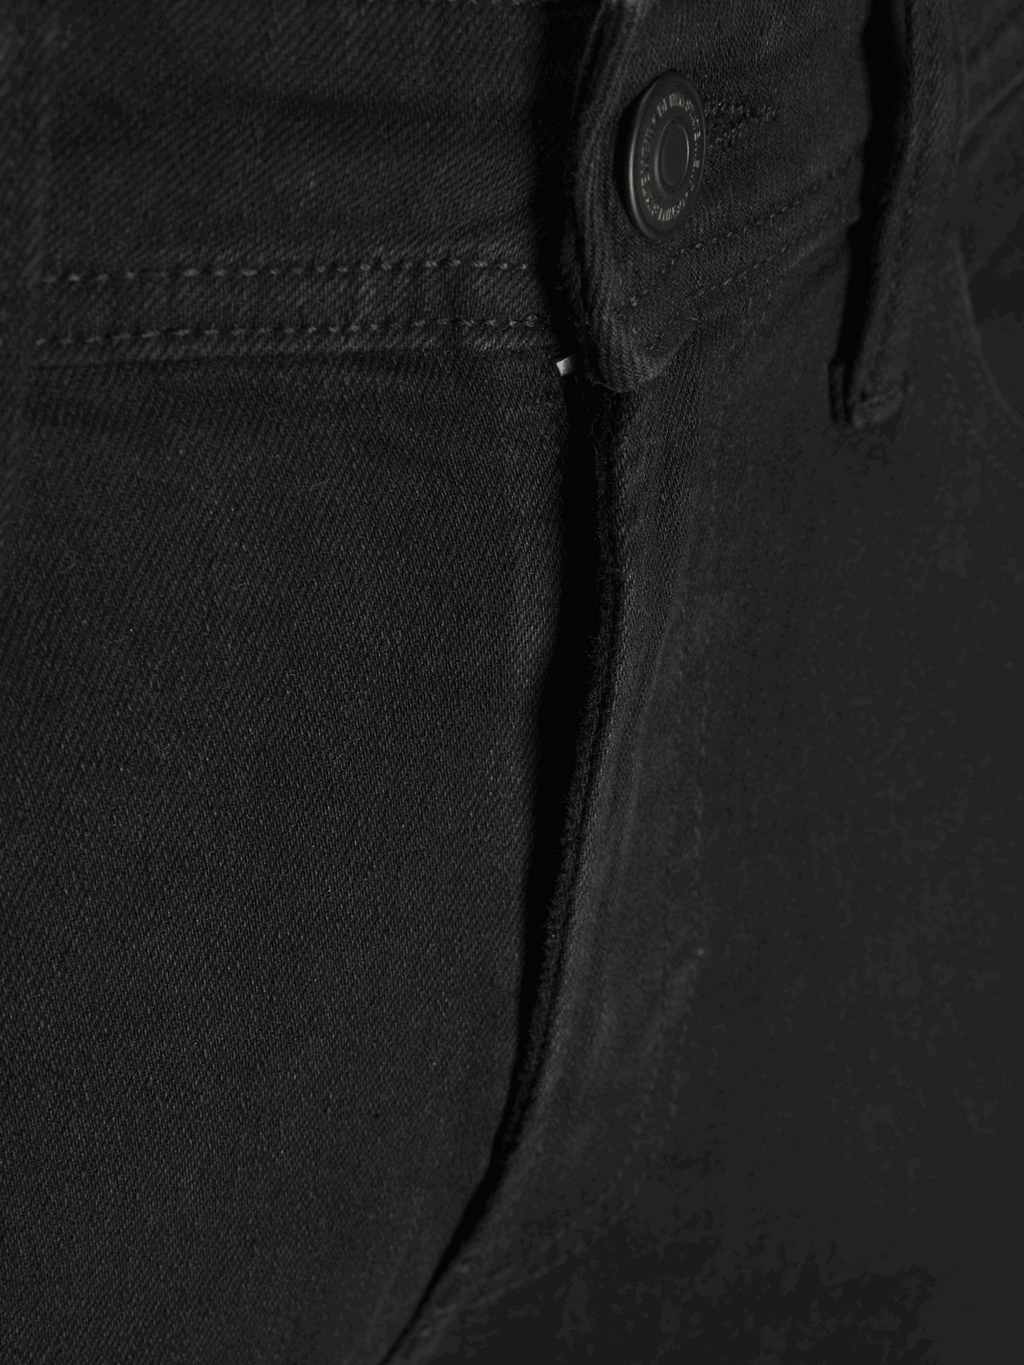 Performance Jeans (Slim) - Black Denim